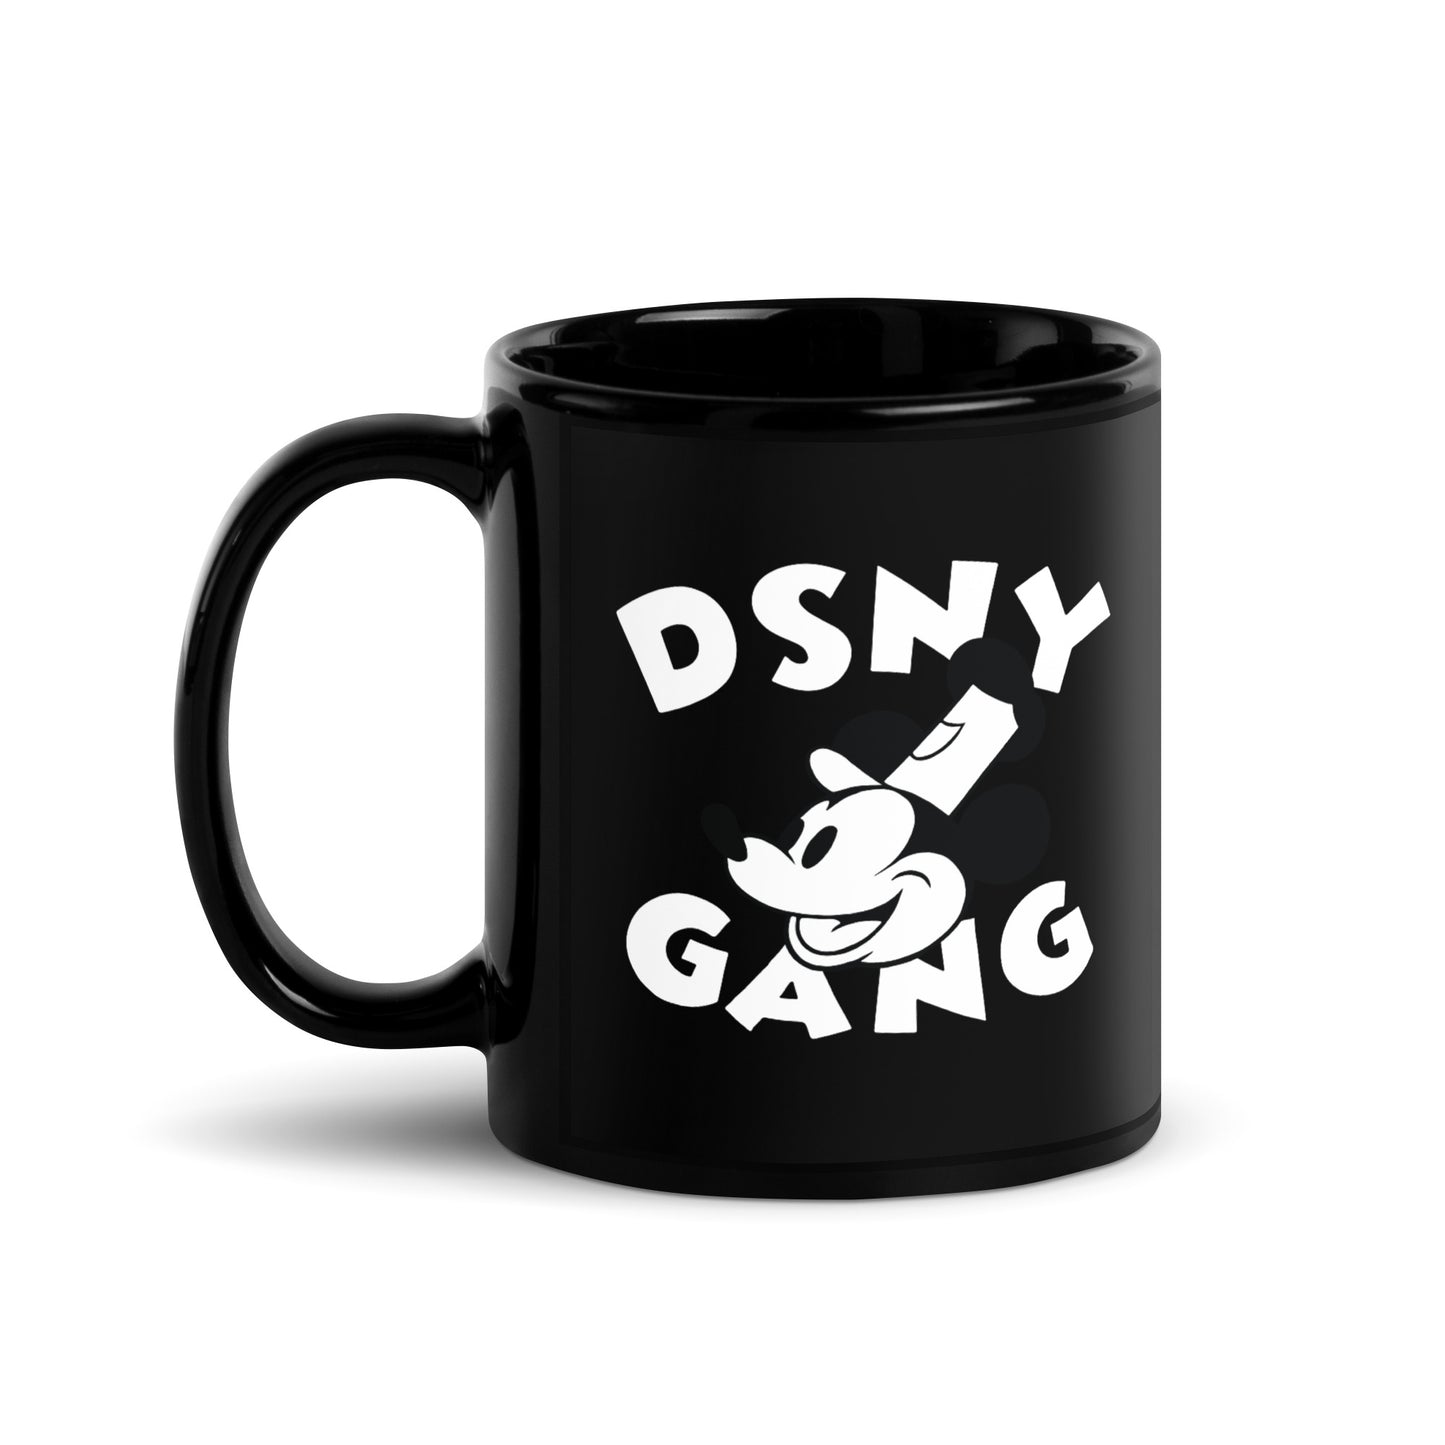 DSNY GANG Steamboat Willie Black Glossy Mug